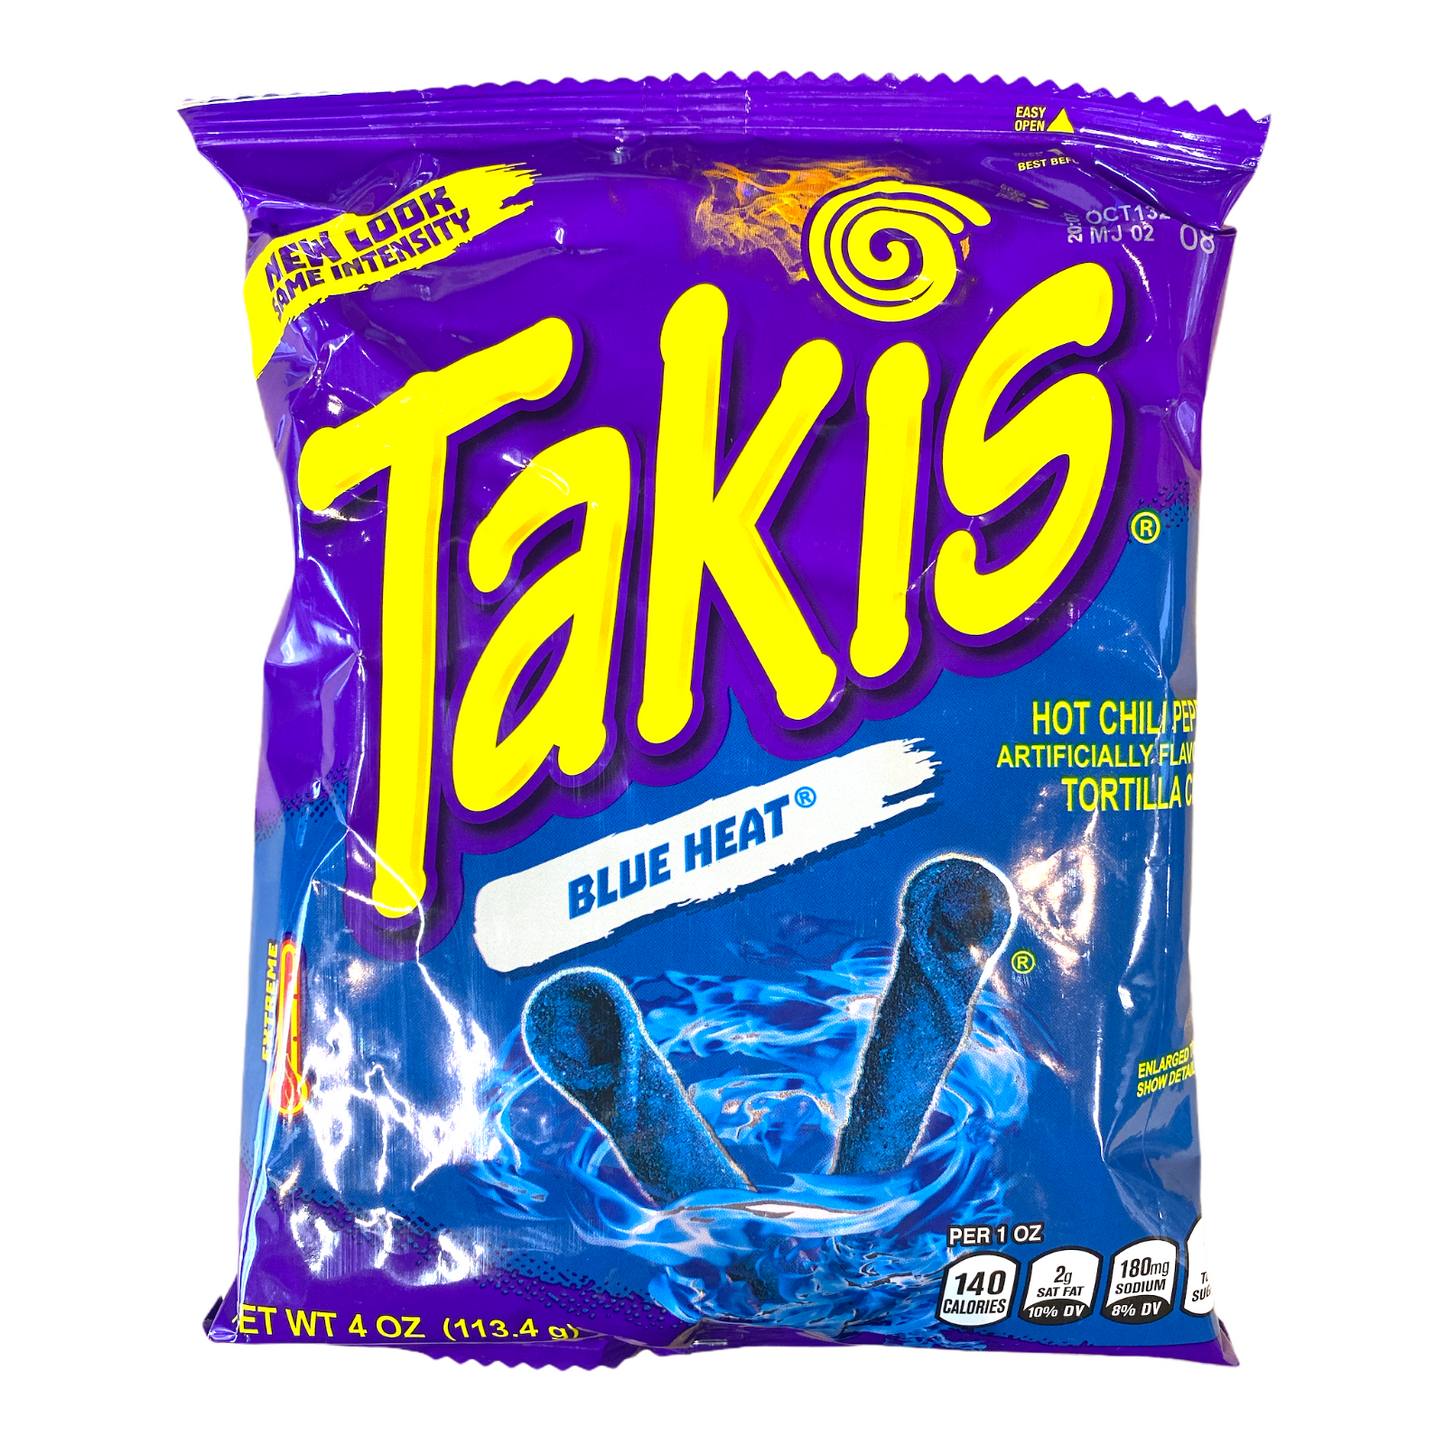 TAKIS BLUE HEAT- 4oz (113.4g)